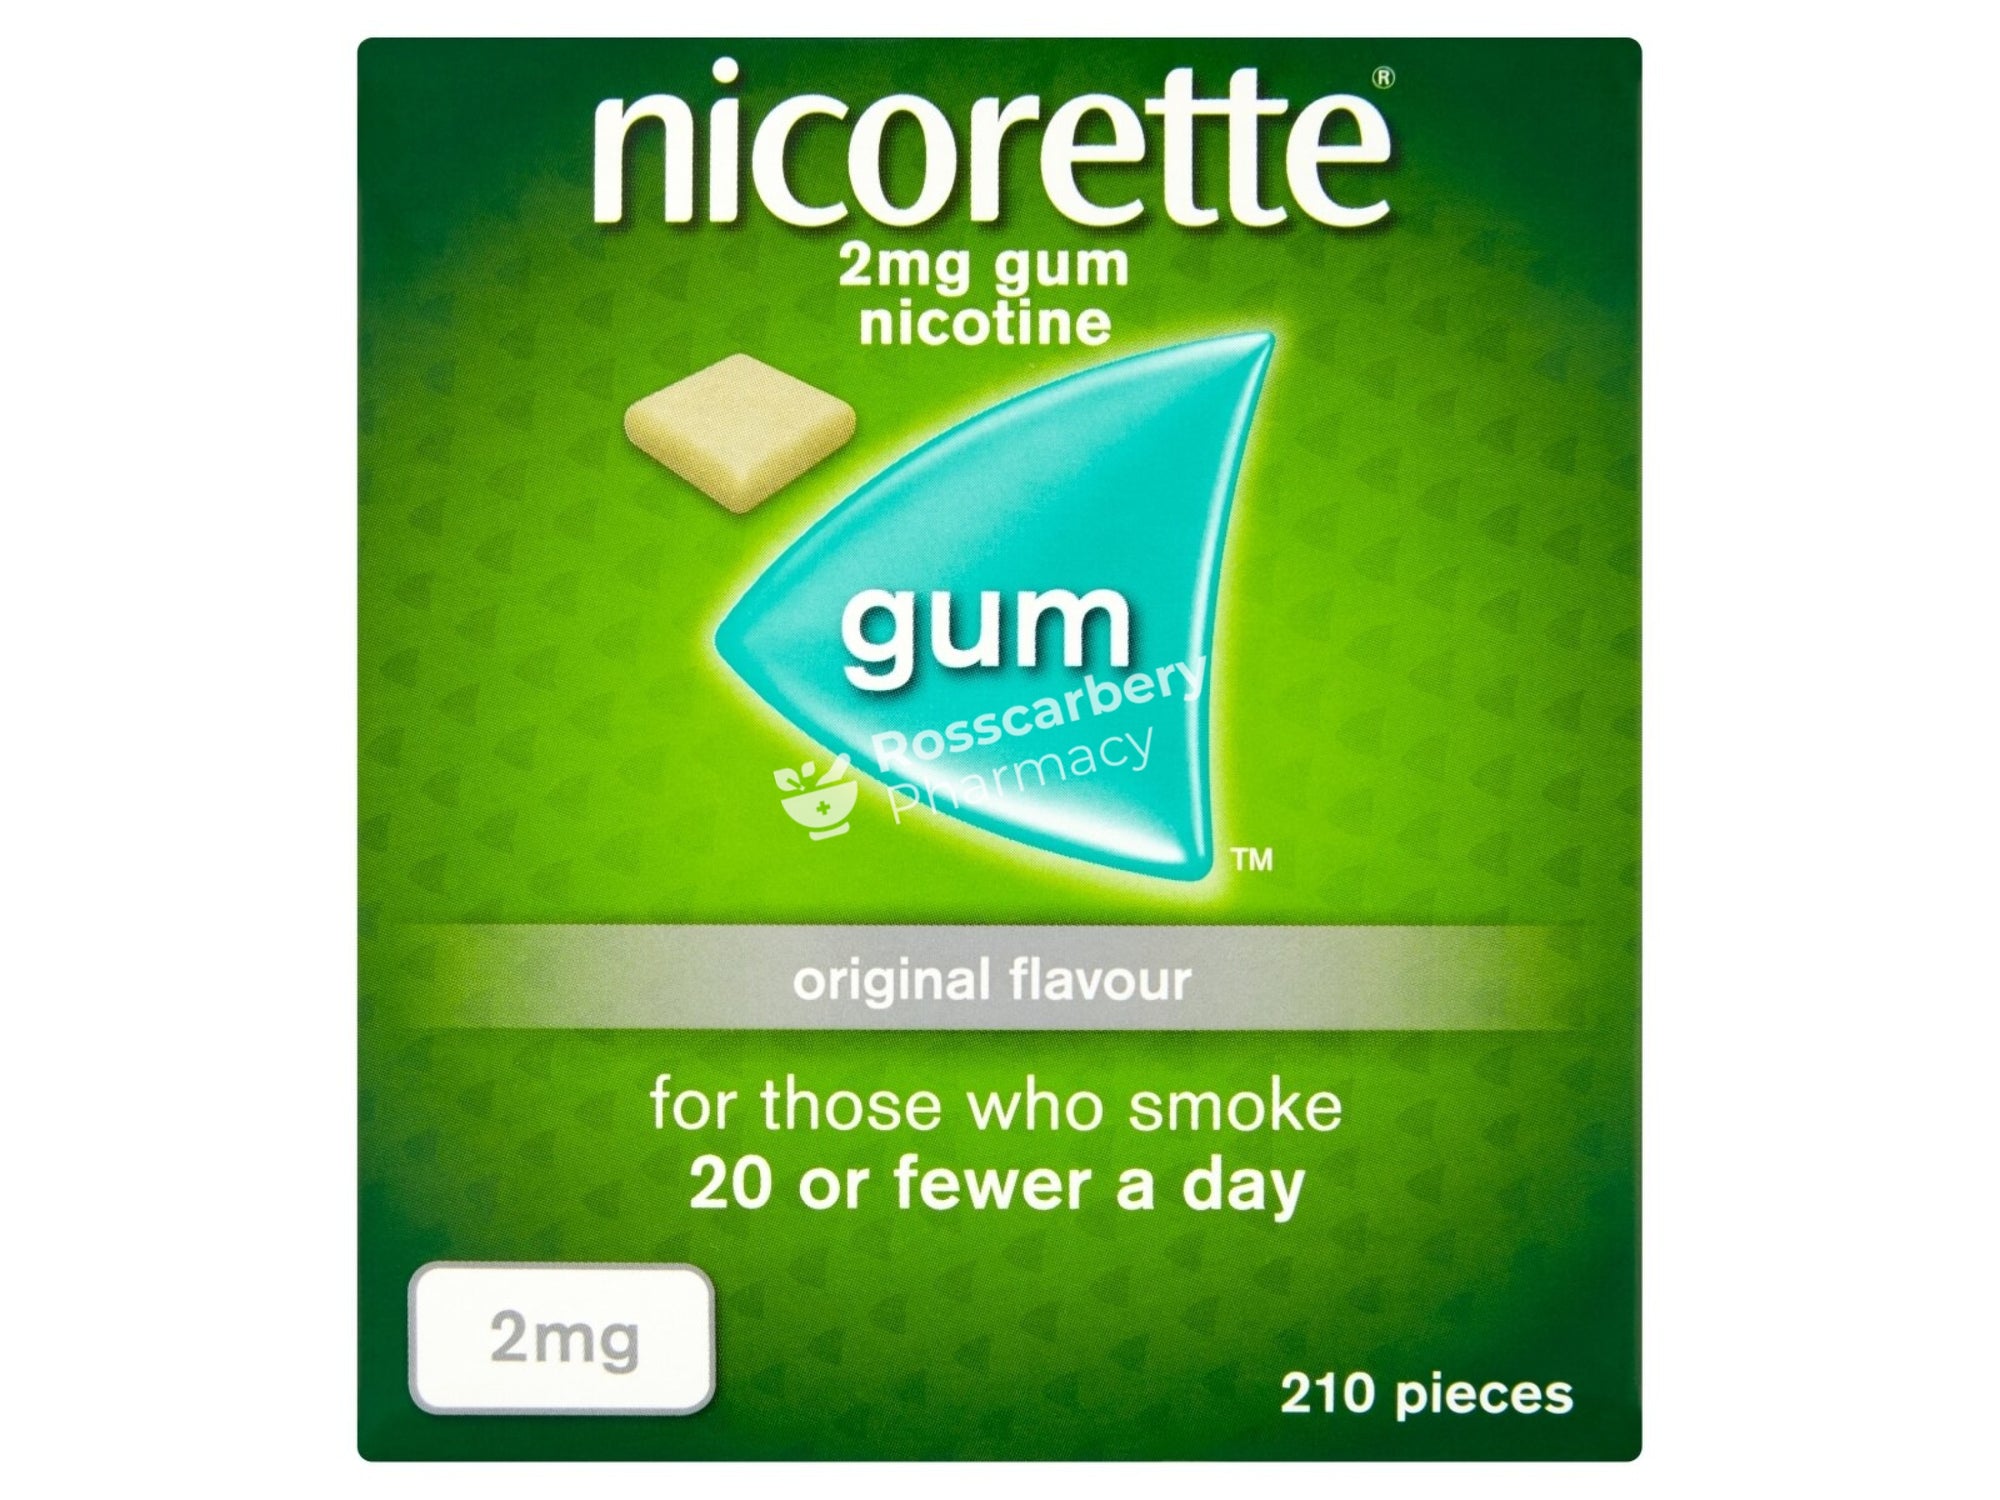 Nicorette 2Mg Low Strength Medicated Chewing Gum 210Pieces / Original Nicotine